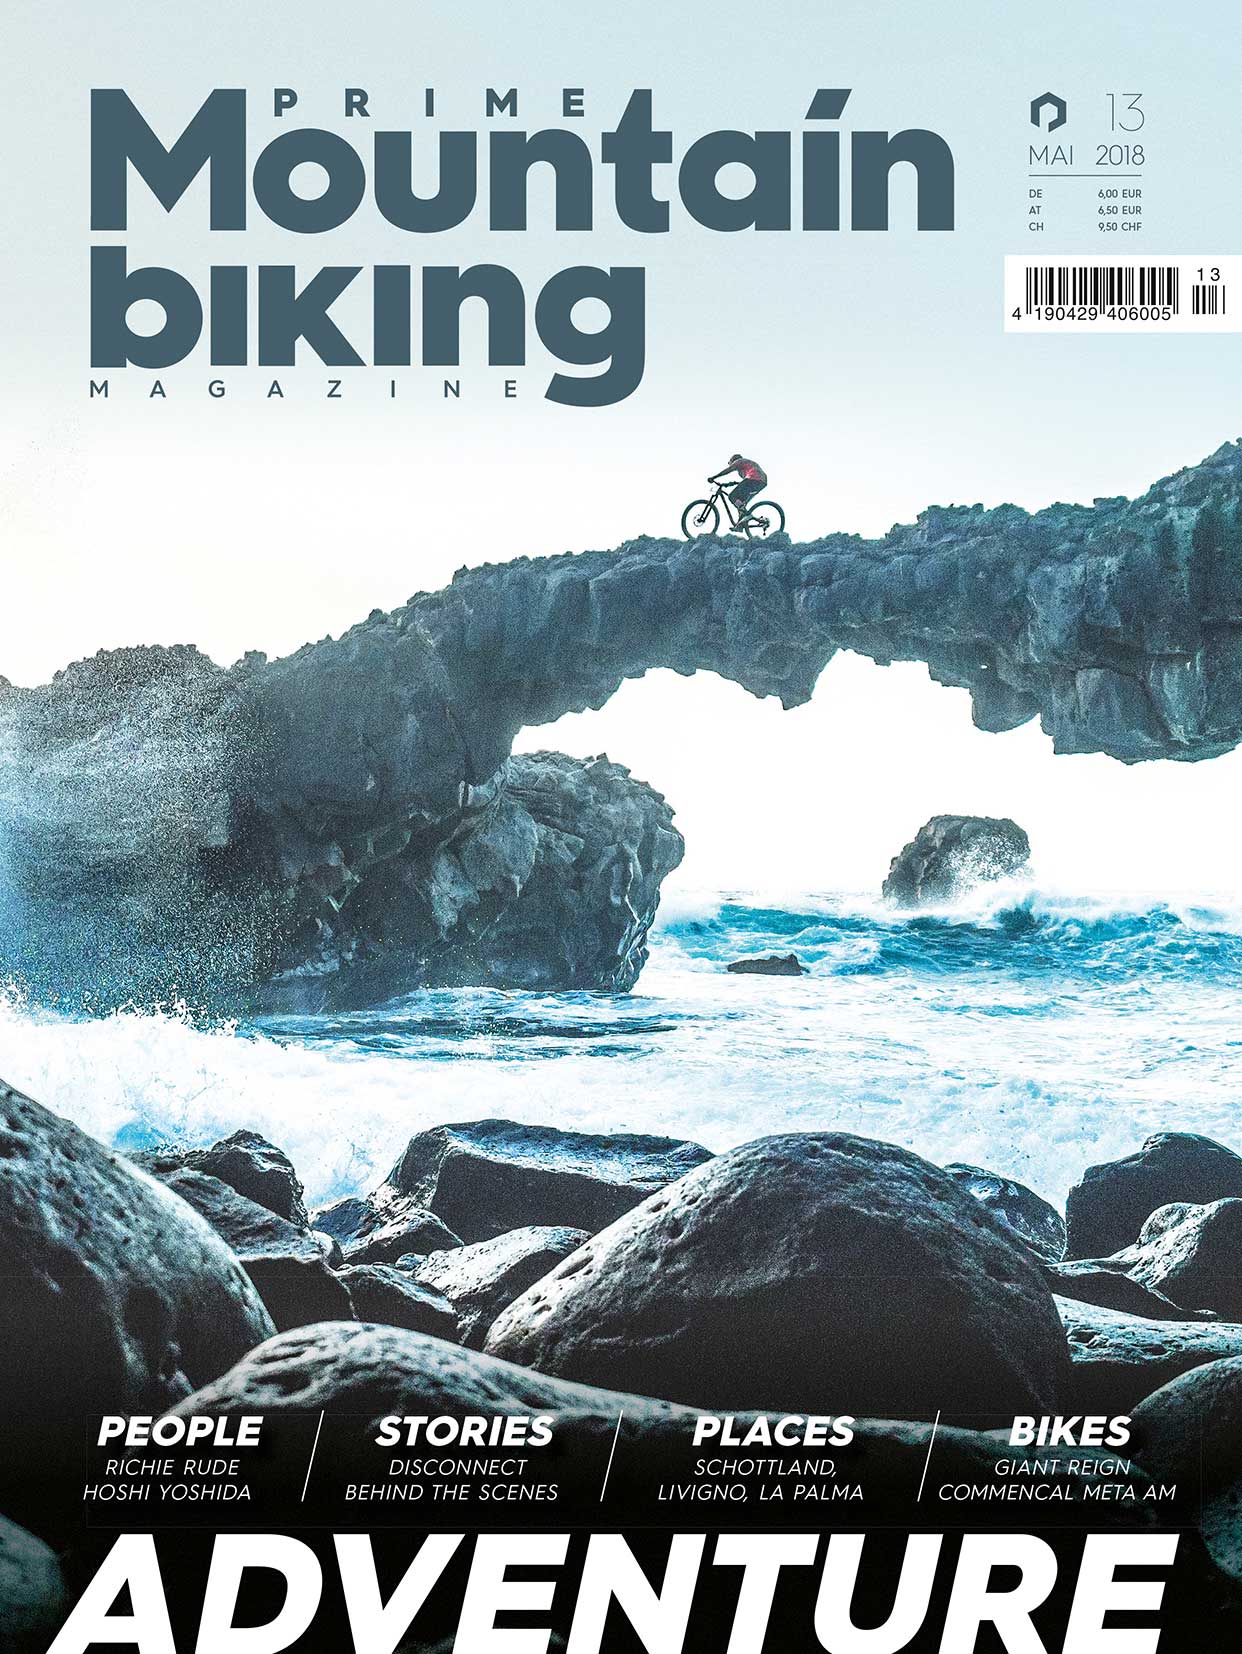 Prime Mountainbiking Magazine 13 Adventure